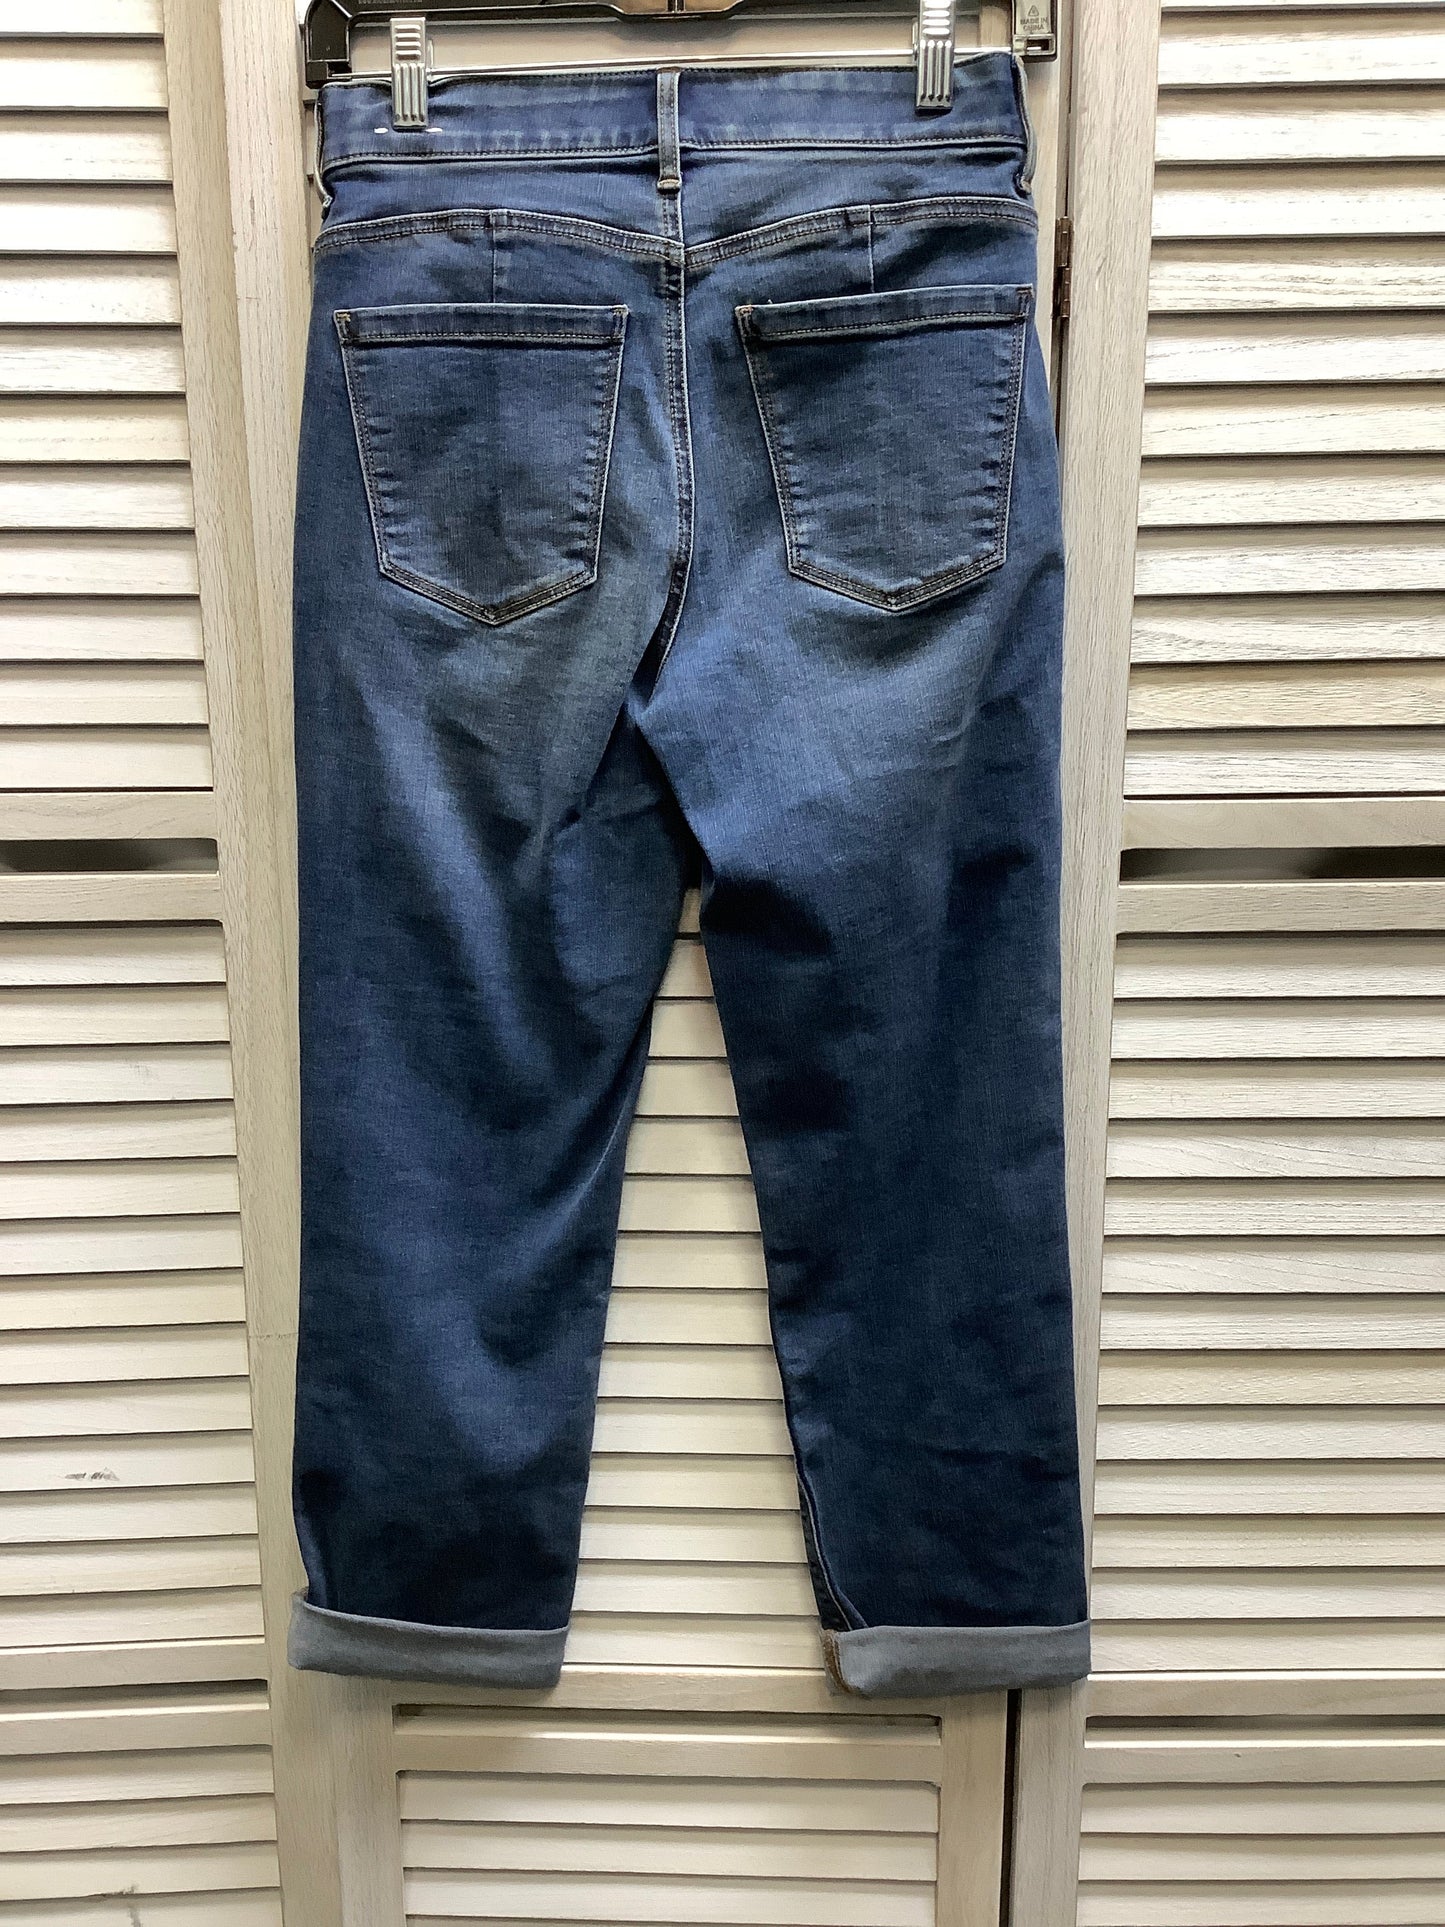 Blue Denim Jeans Skinny White House Black Market, Size 2